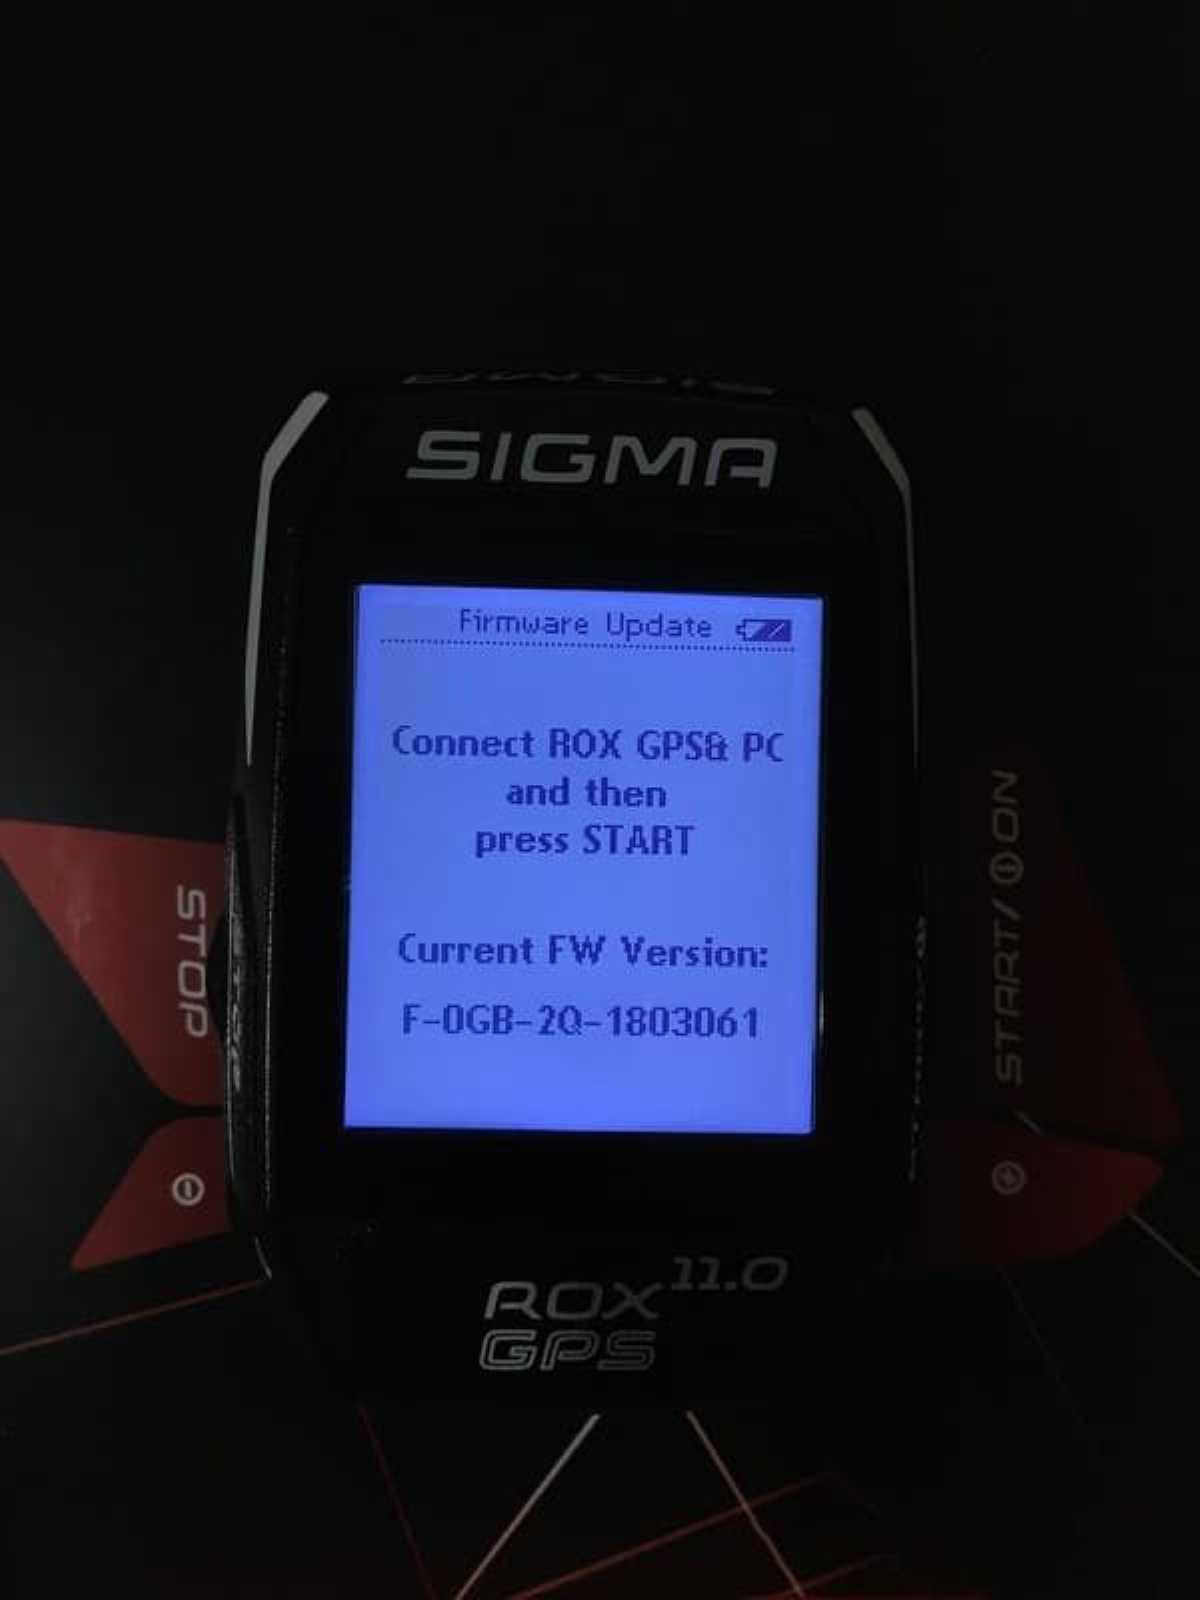 Sigma GPS Rox 11